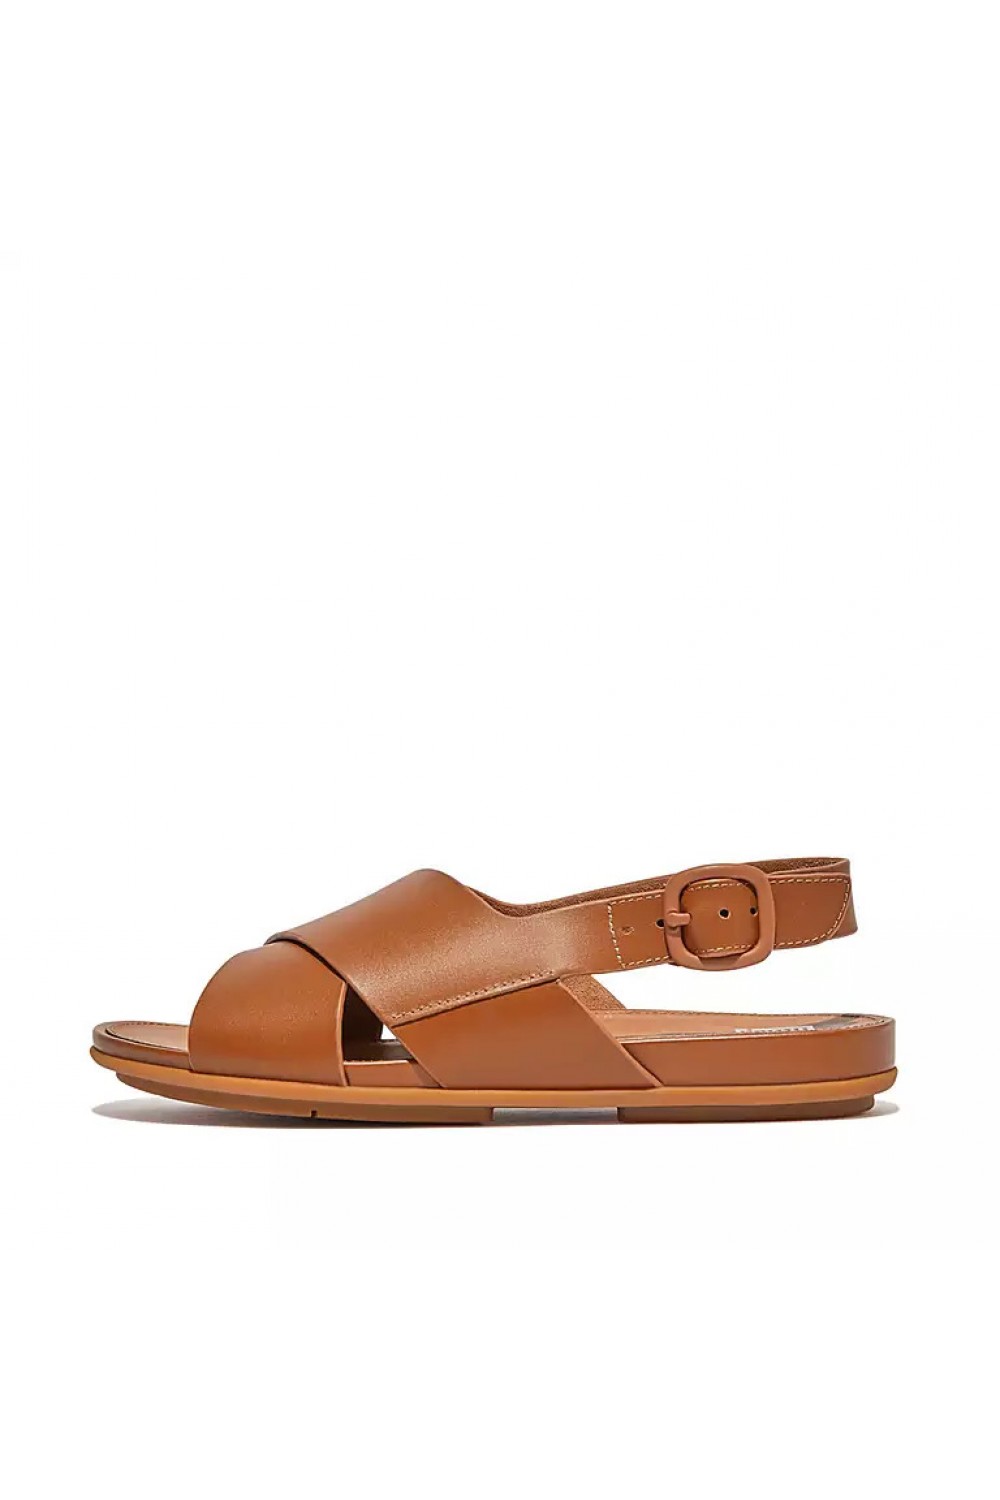 Fitflop GRACIE Leather Crisscross Sandals Light Tan